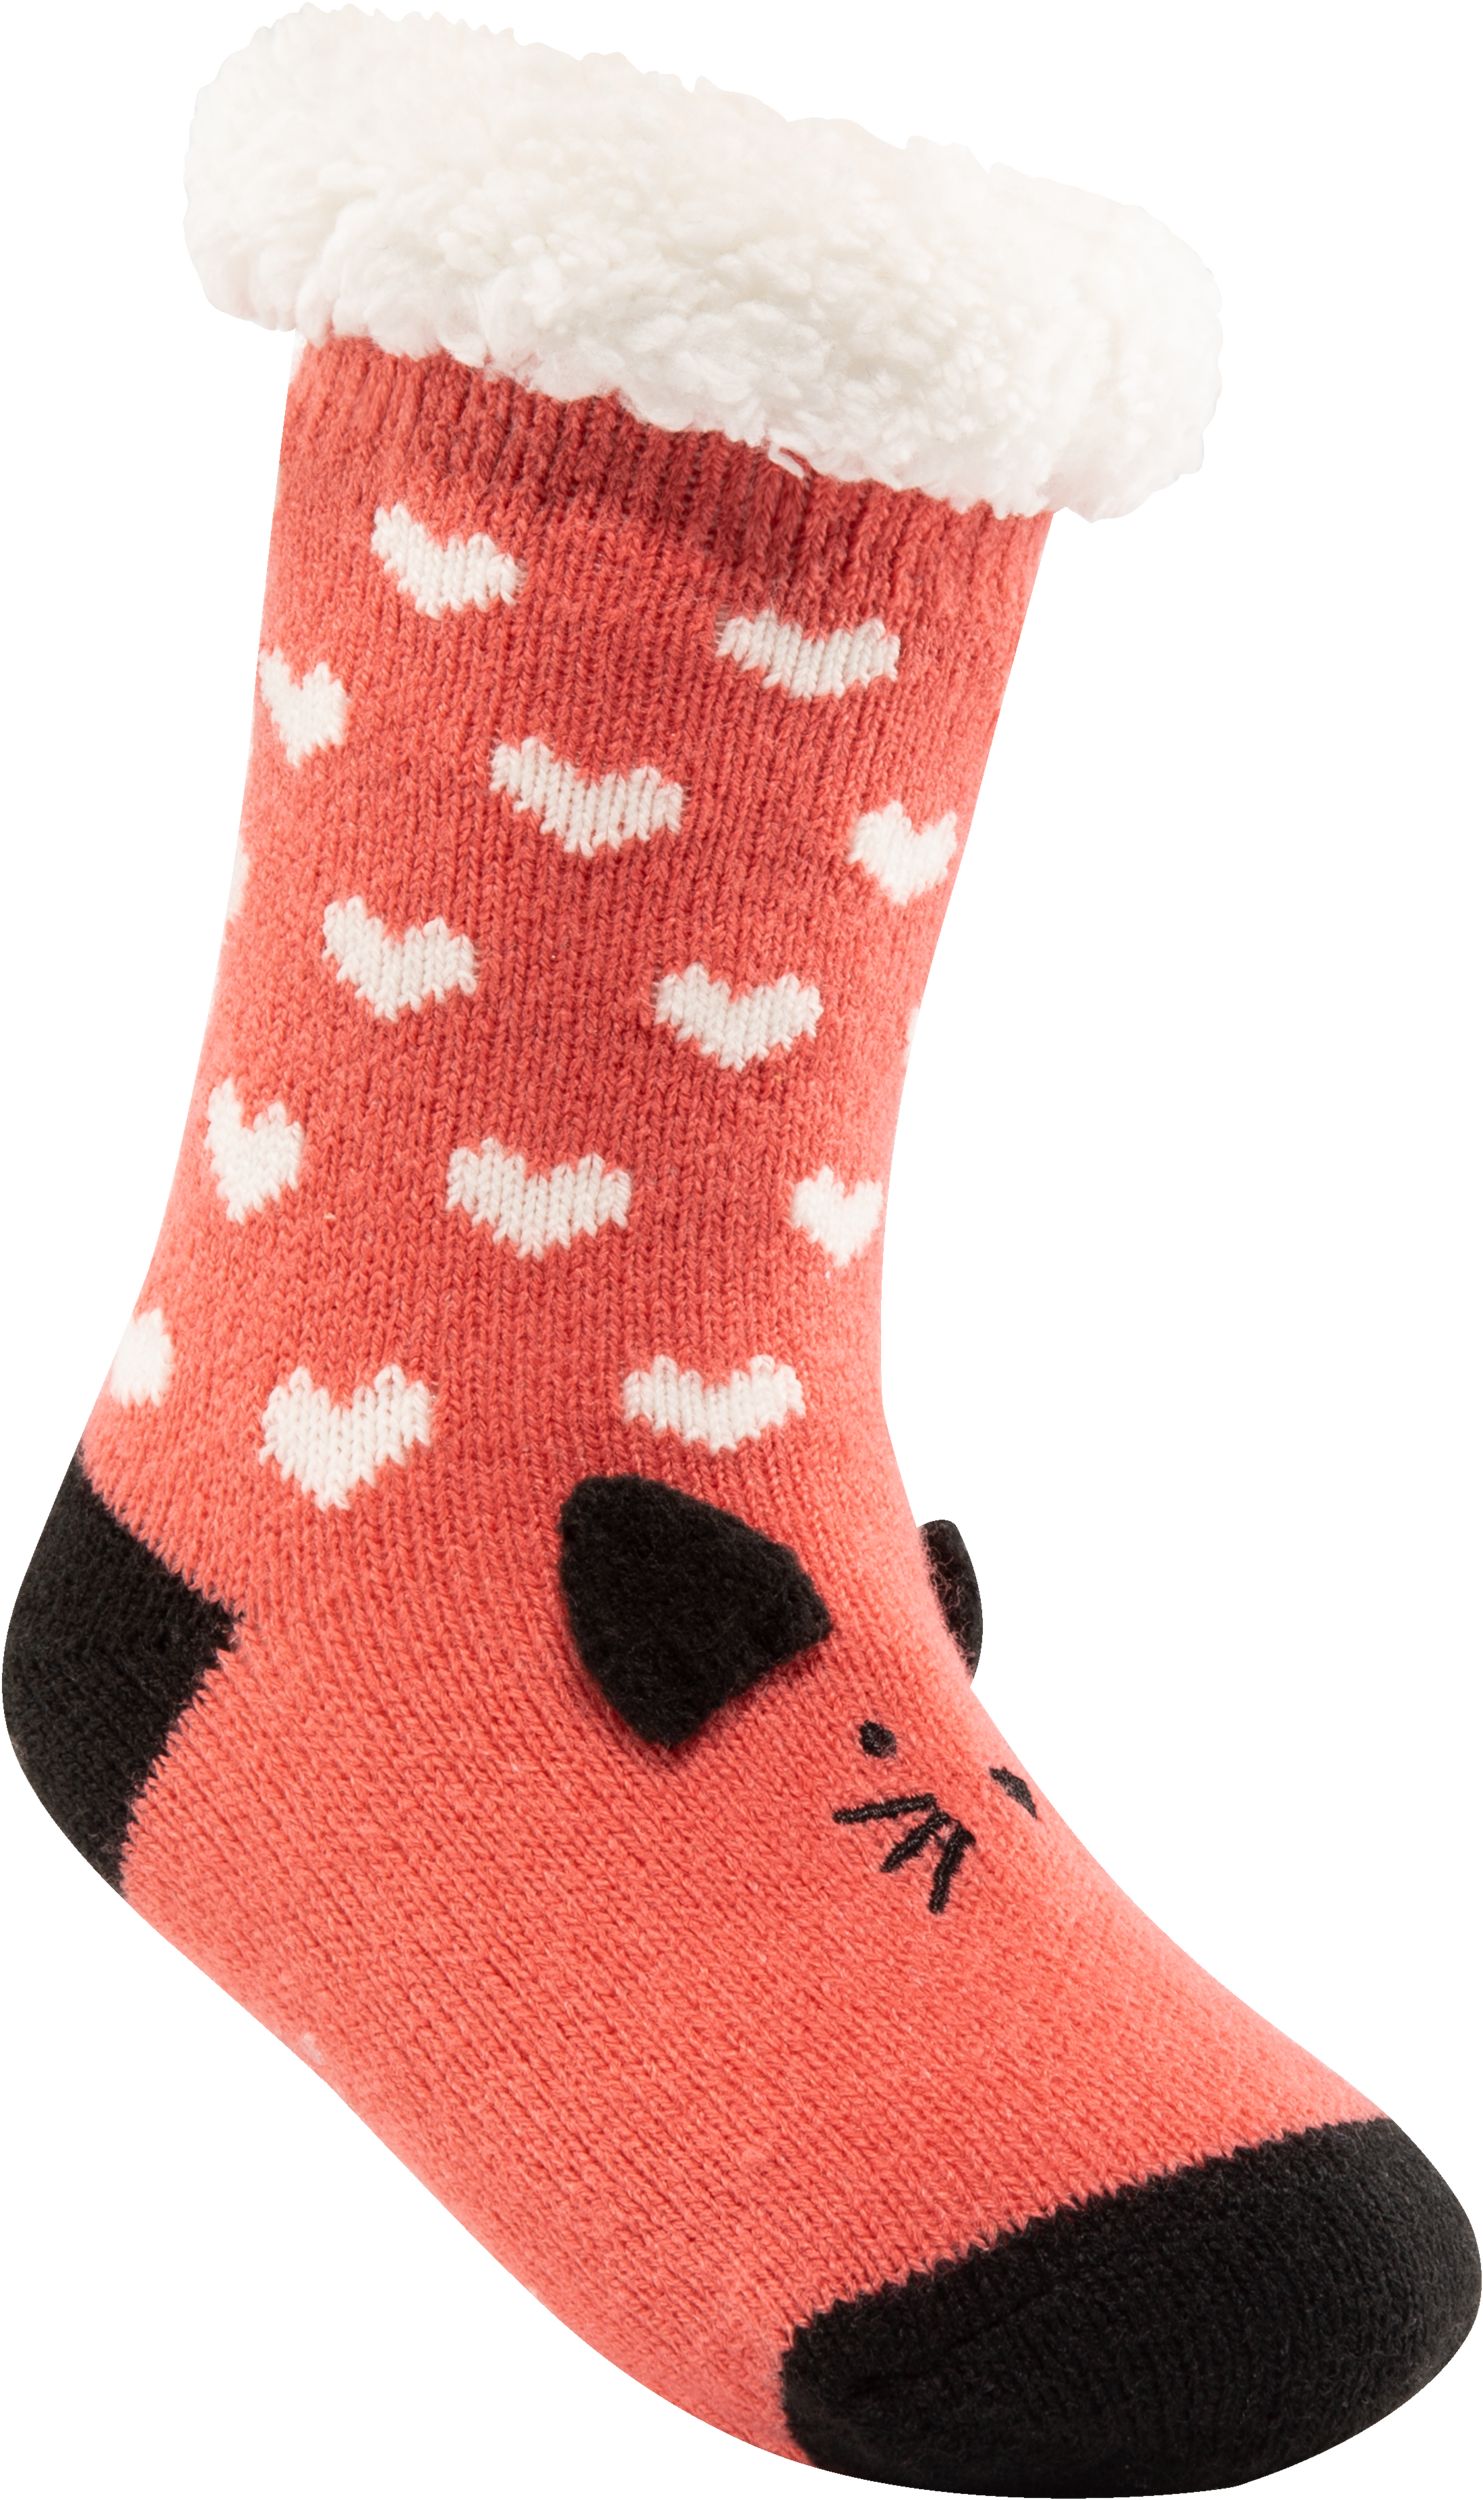 Ripzone Toddler Girls' Kitty Cozy Socks